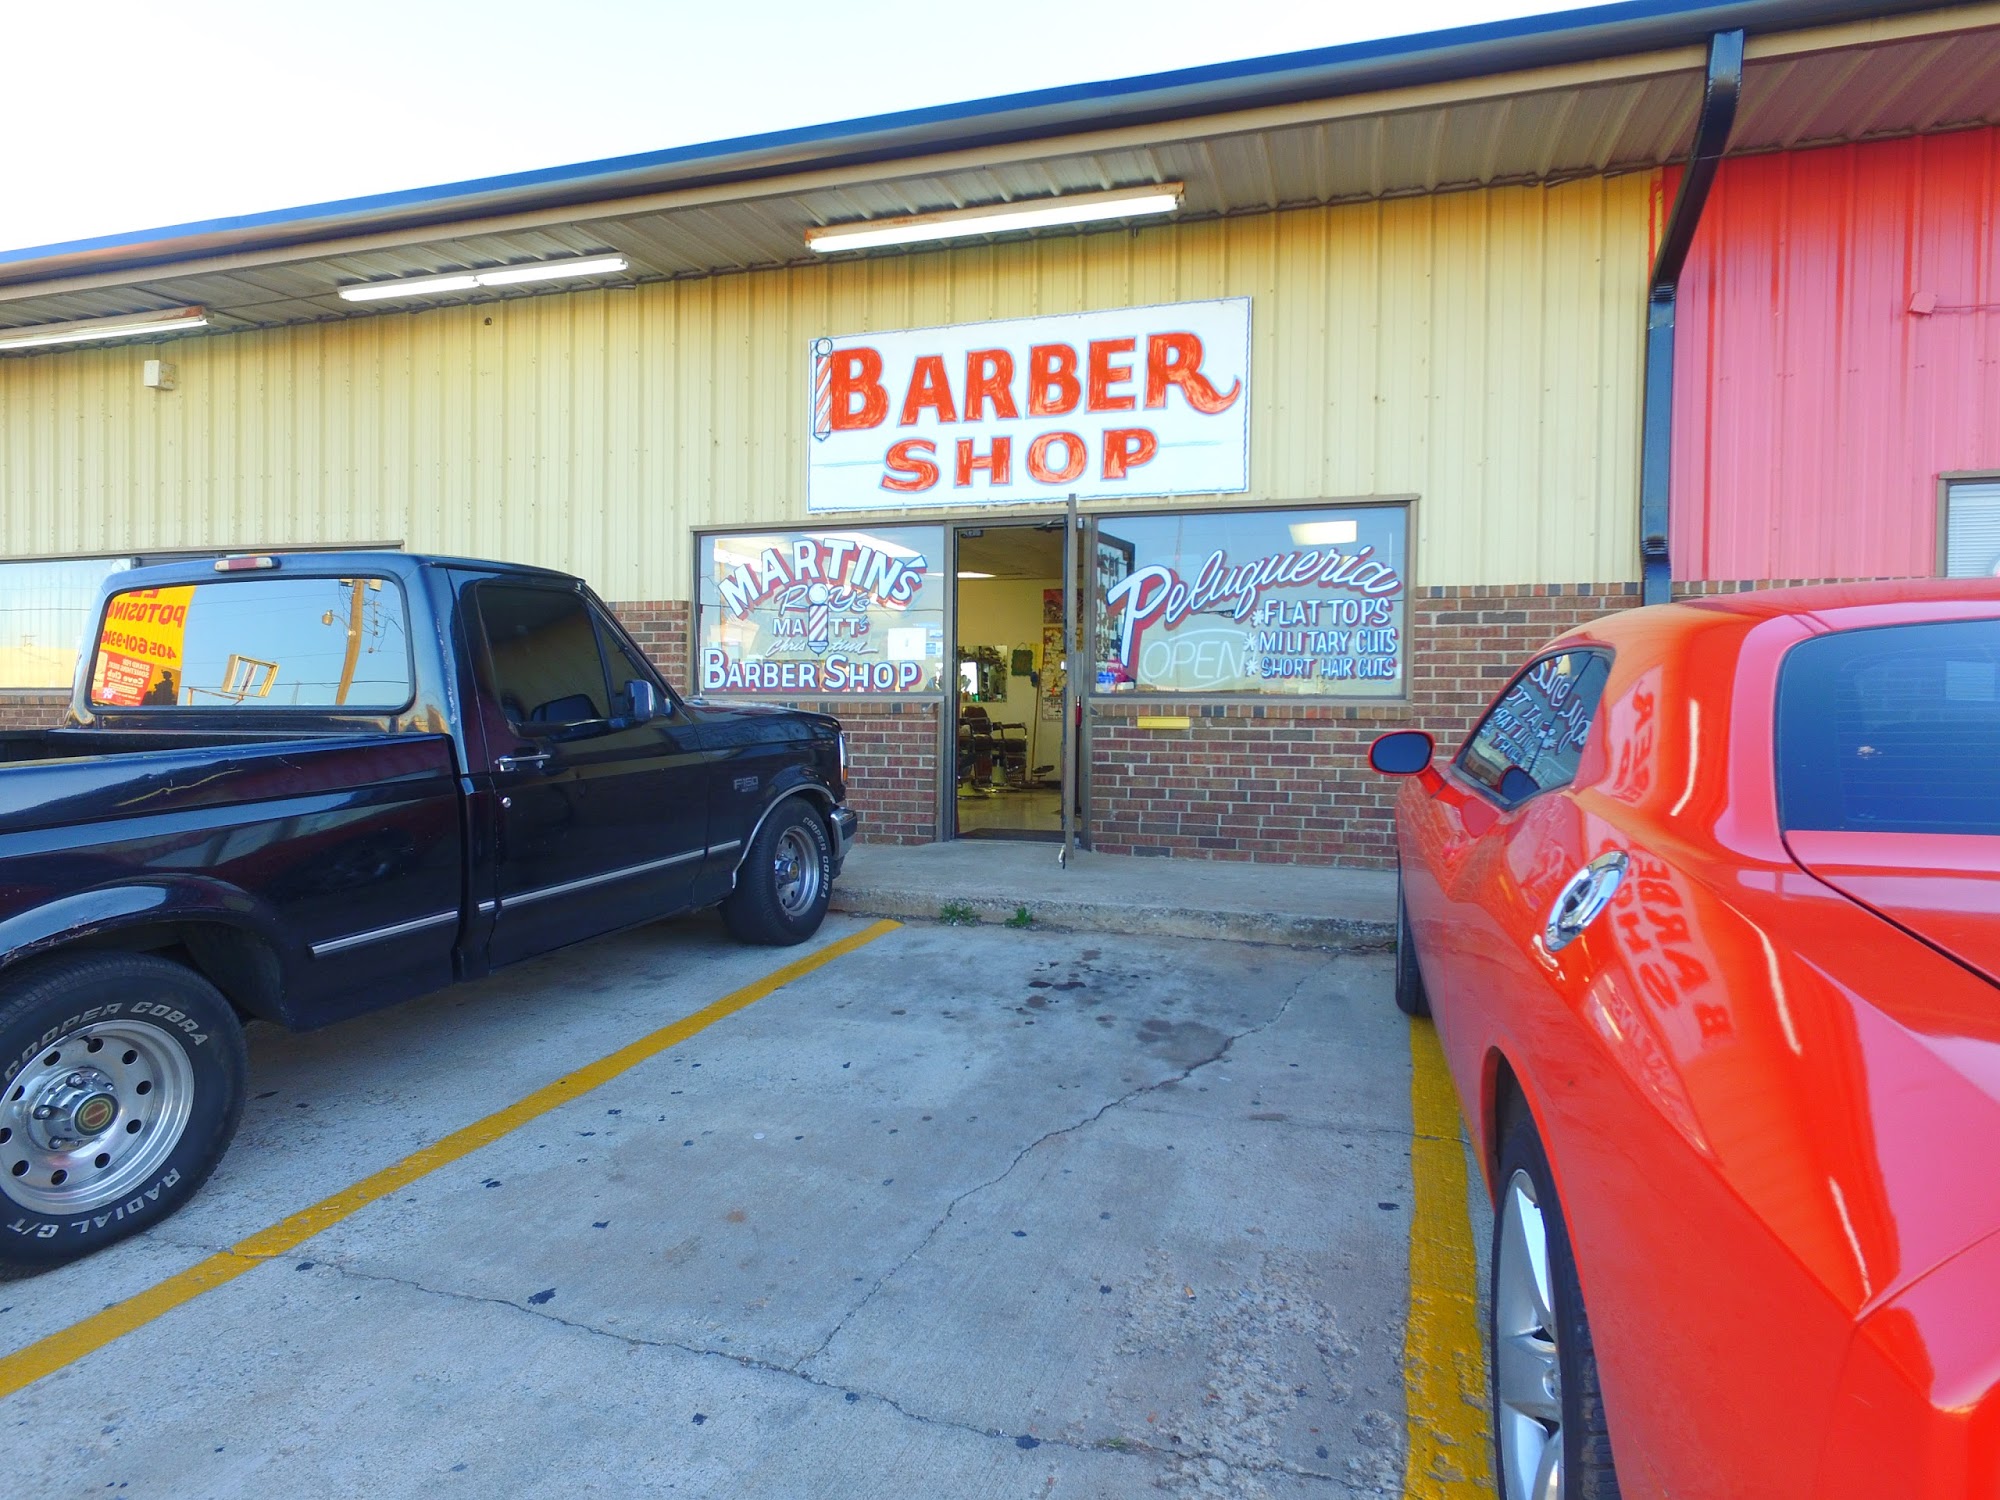 Martin's Barber Shop